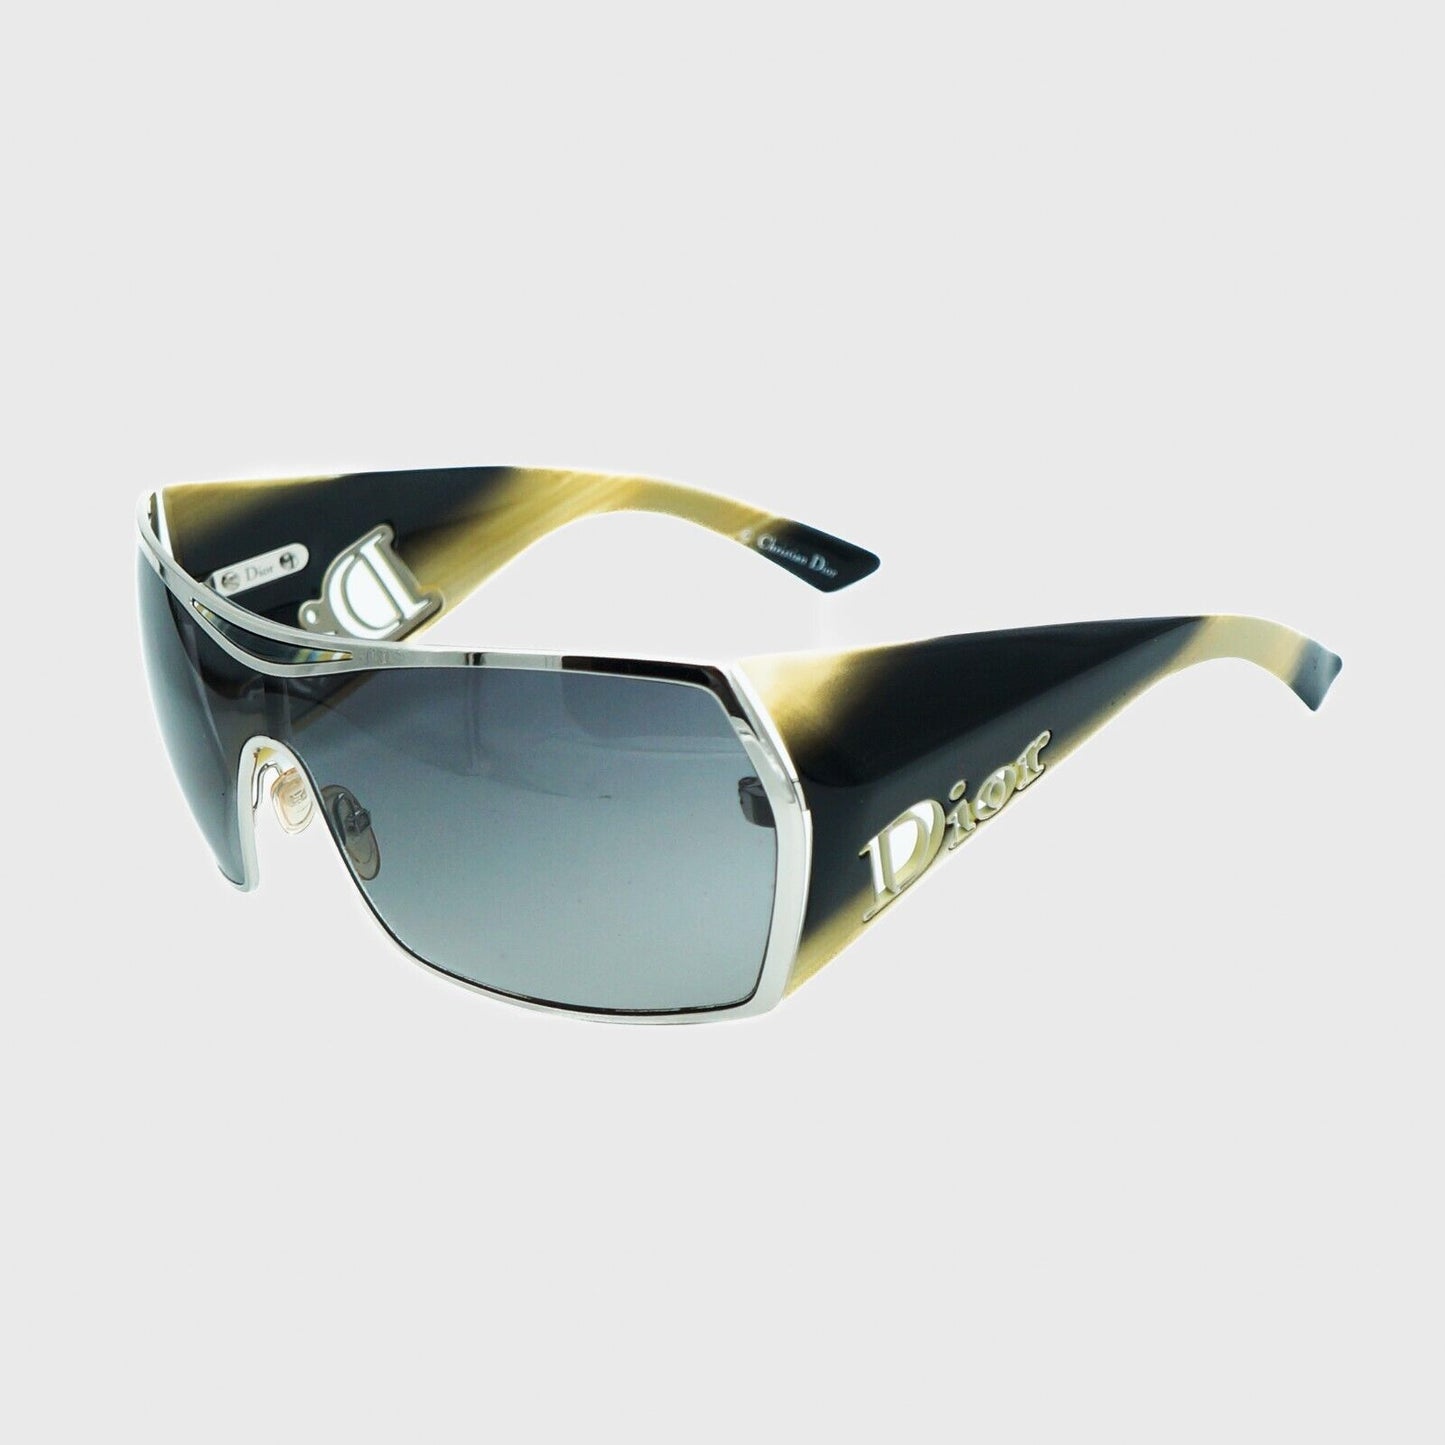 Christian DIOR GAUCHO 2 Shield Mask Sunglasses Vintage 90s 00s